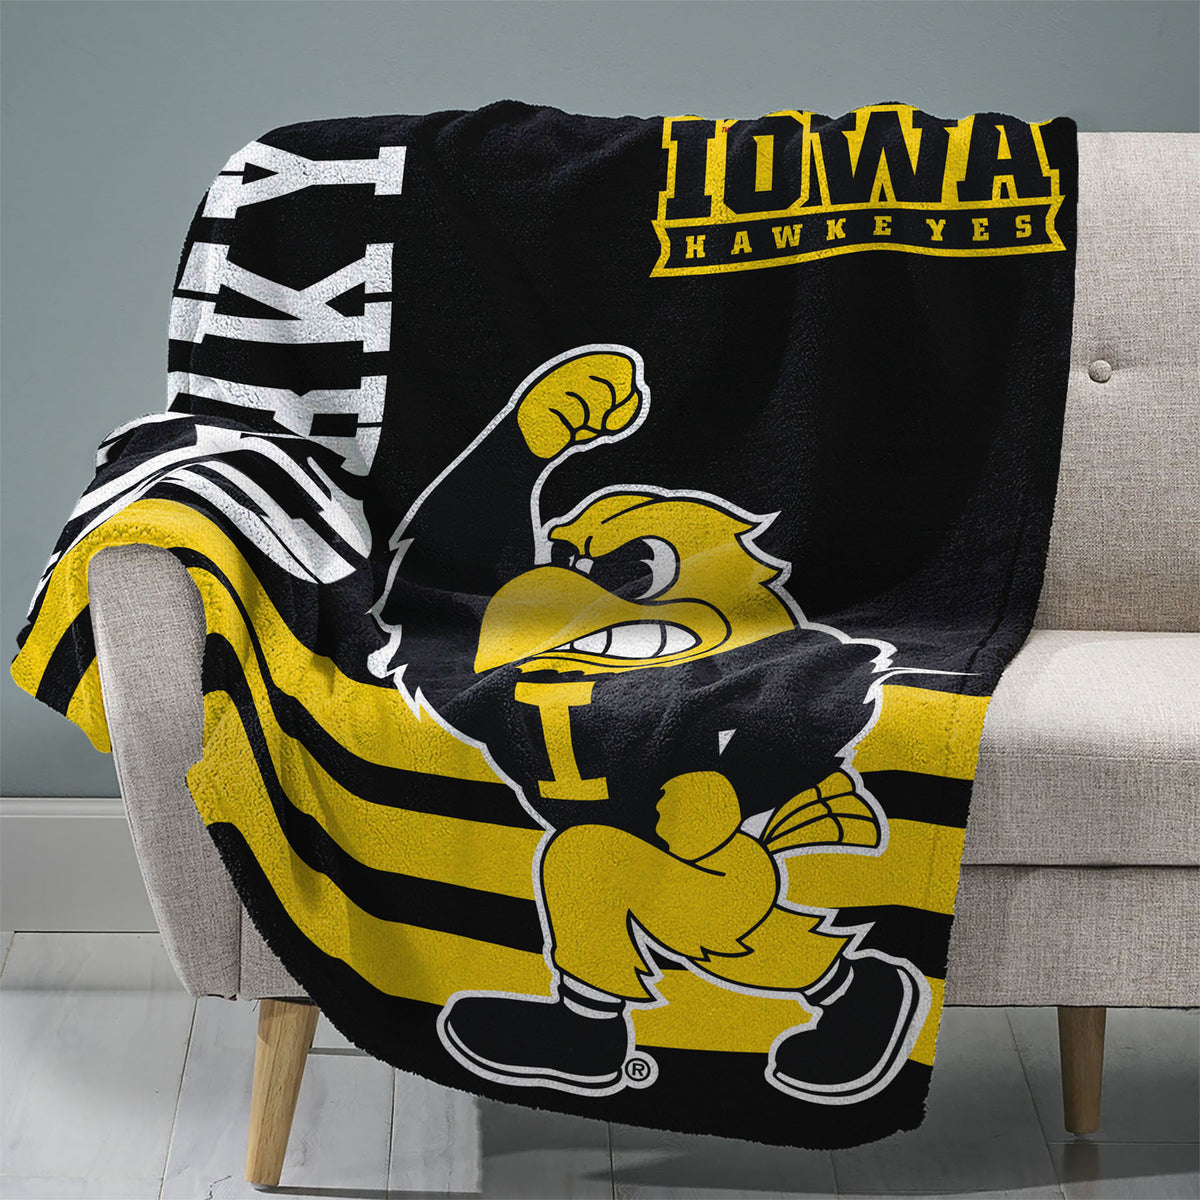 Iowa Hawkeyes Herky the Hawk Mascot 60” x 80”  Raschel Plush Blanket